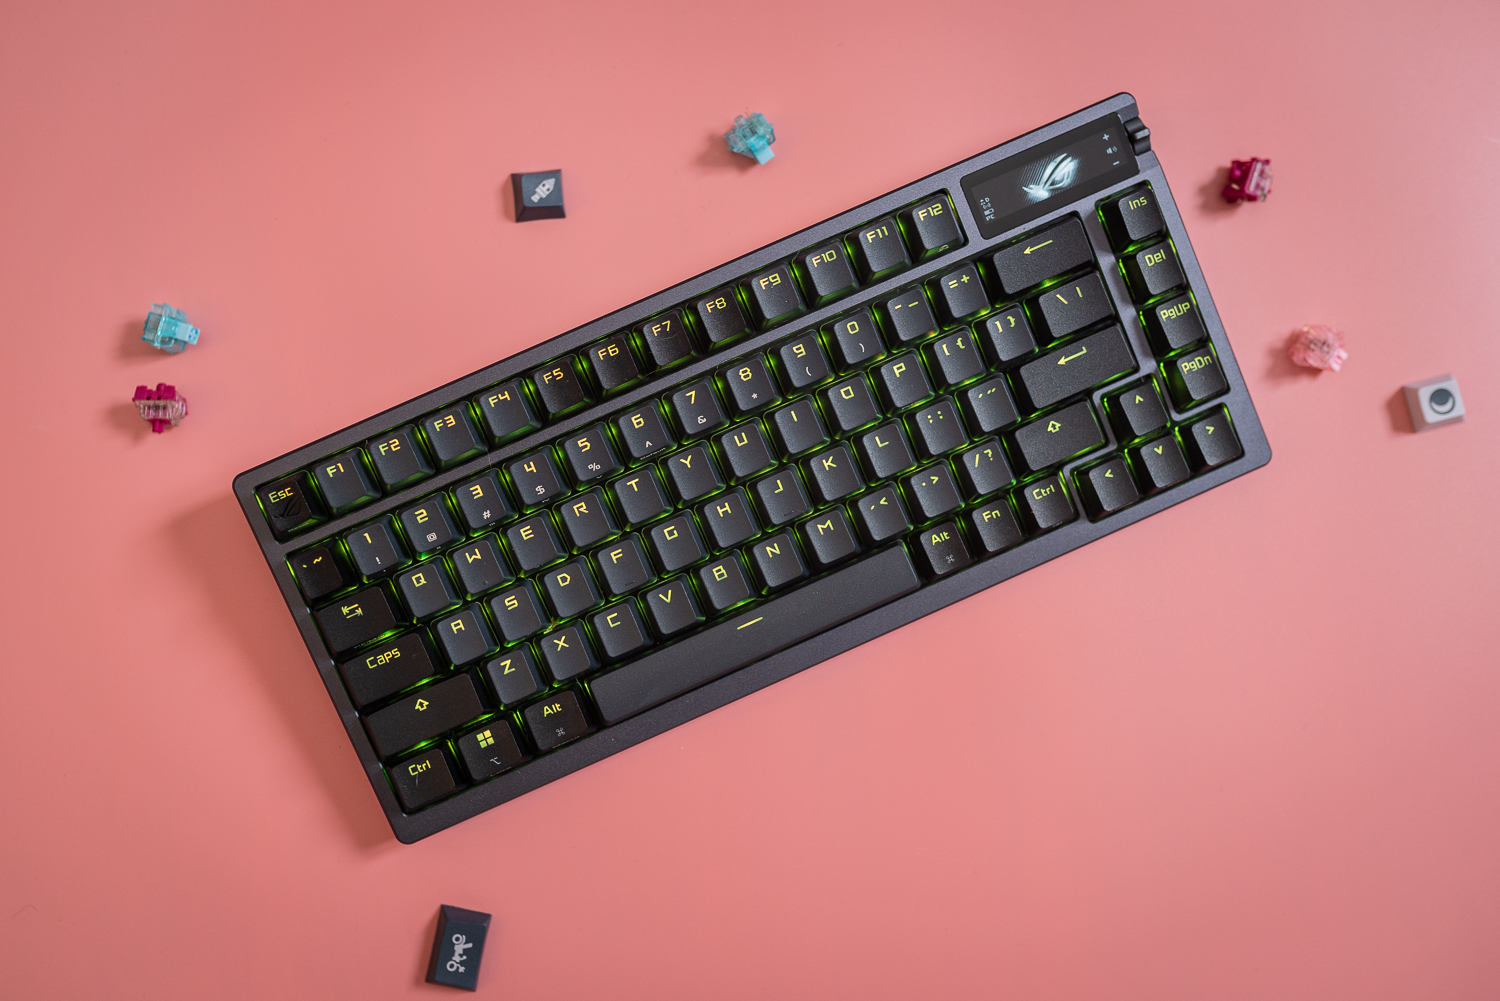 ASUS ROG Azoth review: Making this keyboard nerd happy